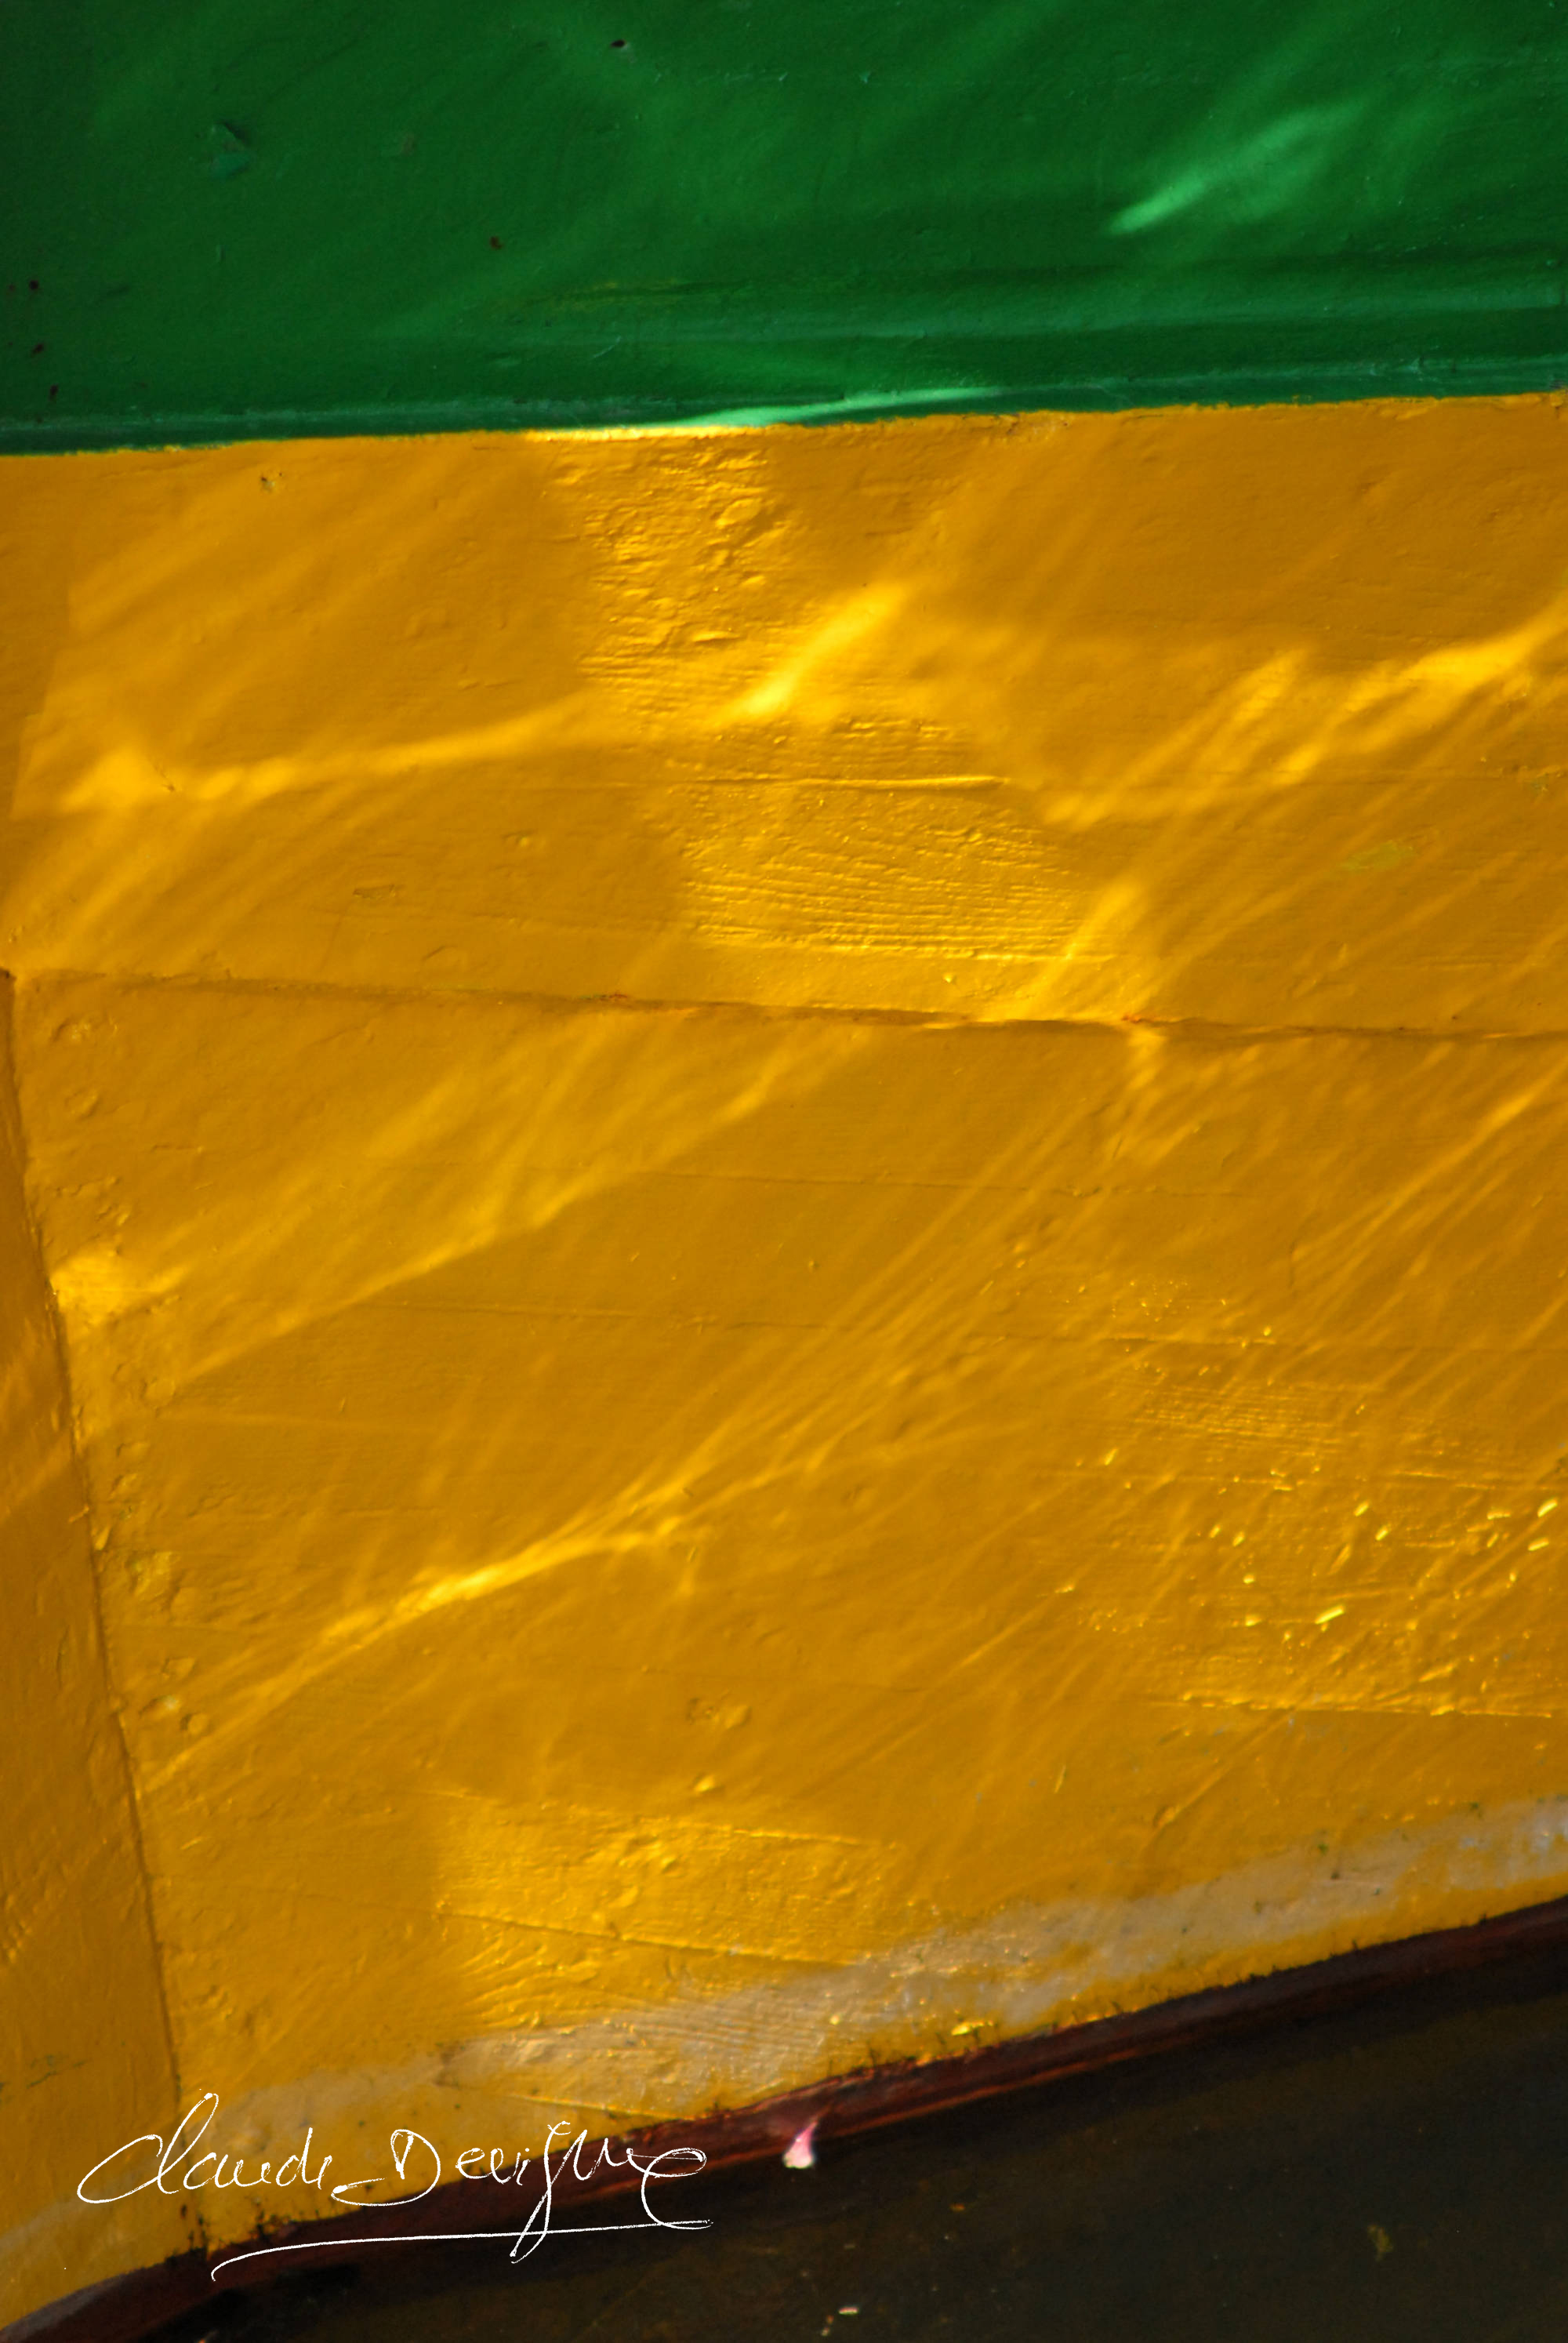 une coque de bateau verte et jaune